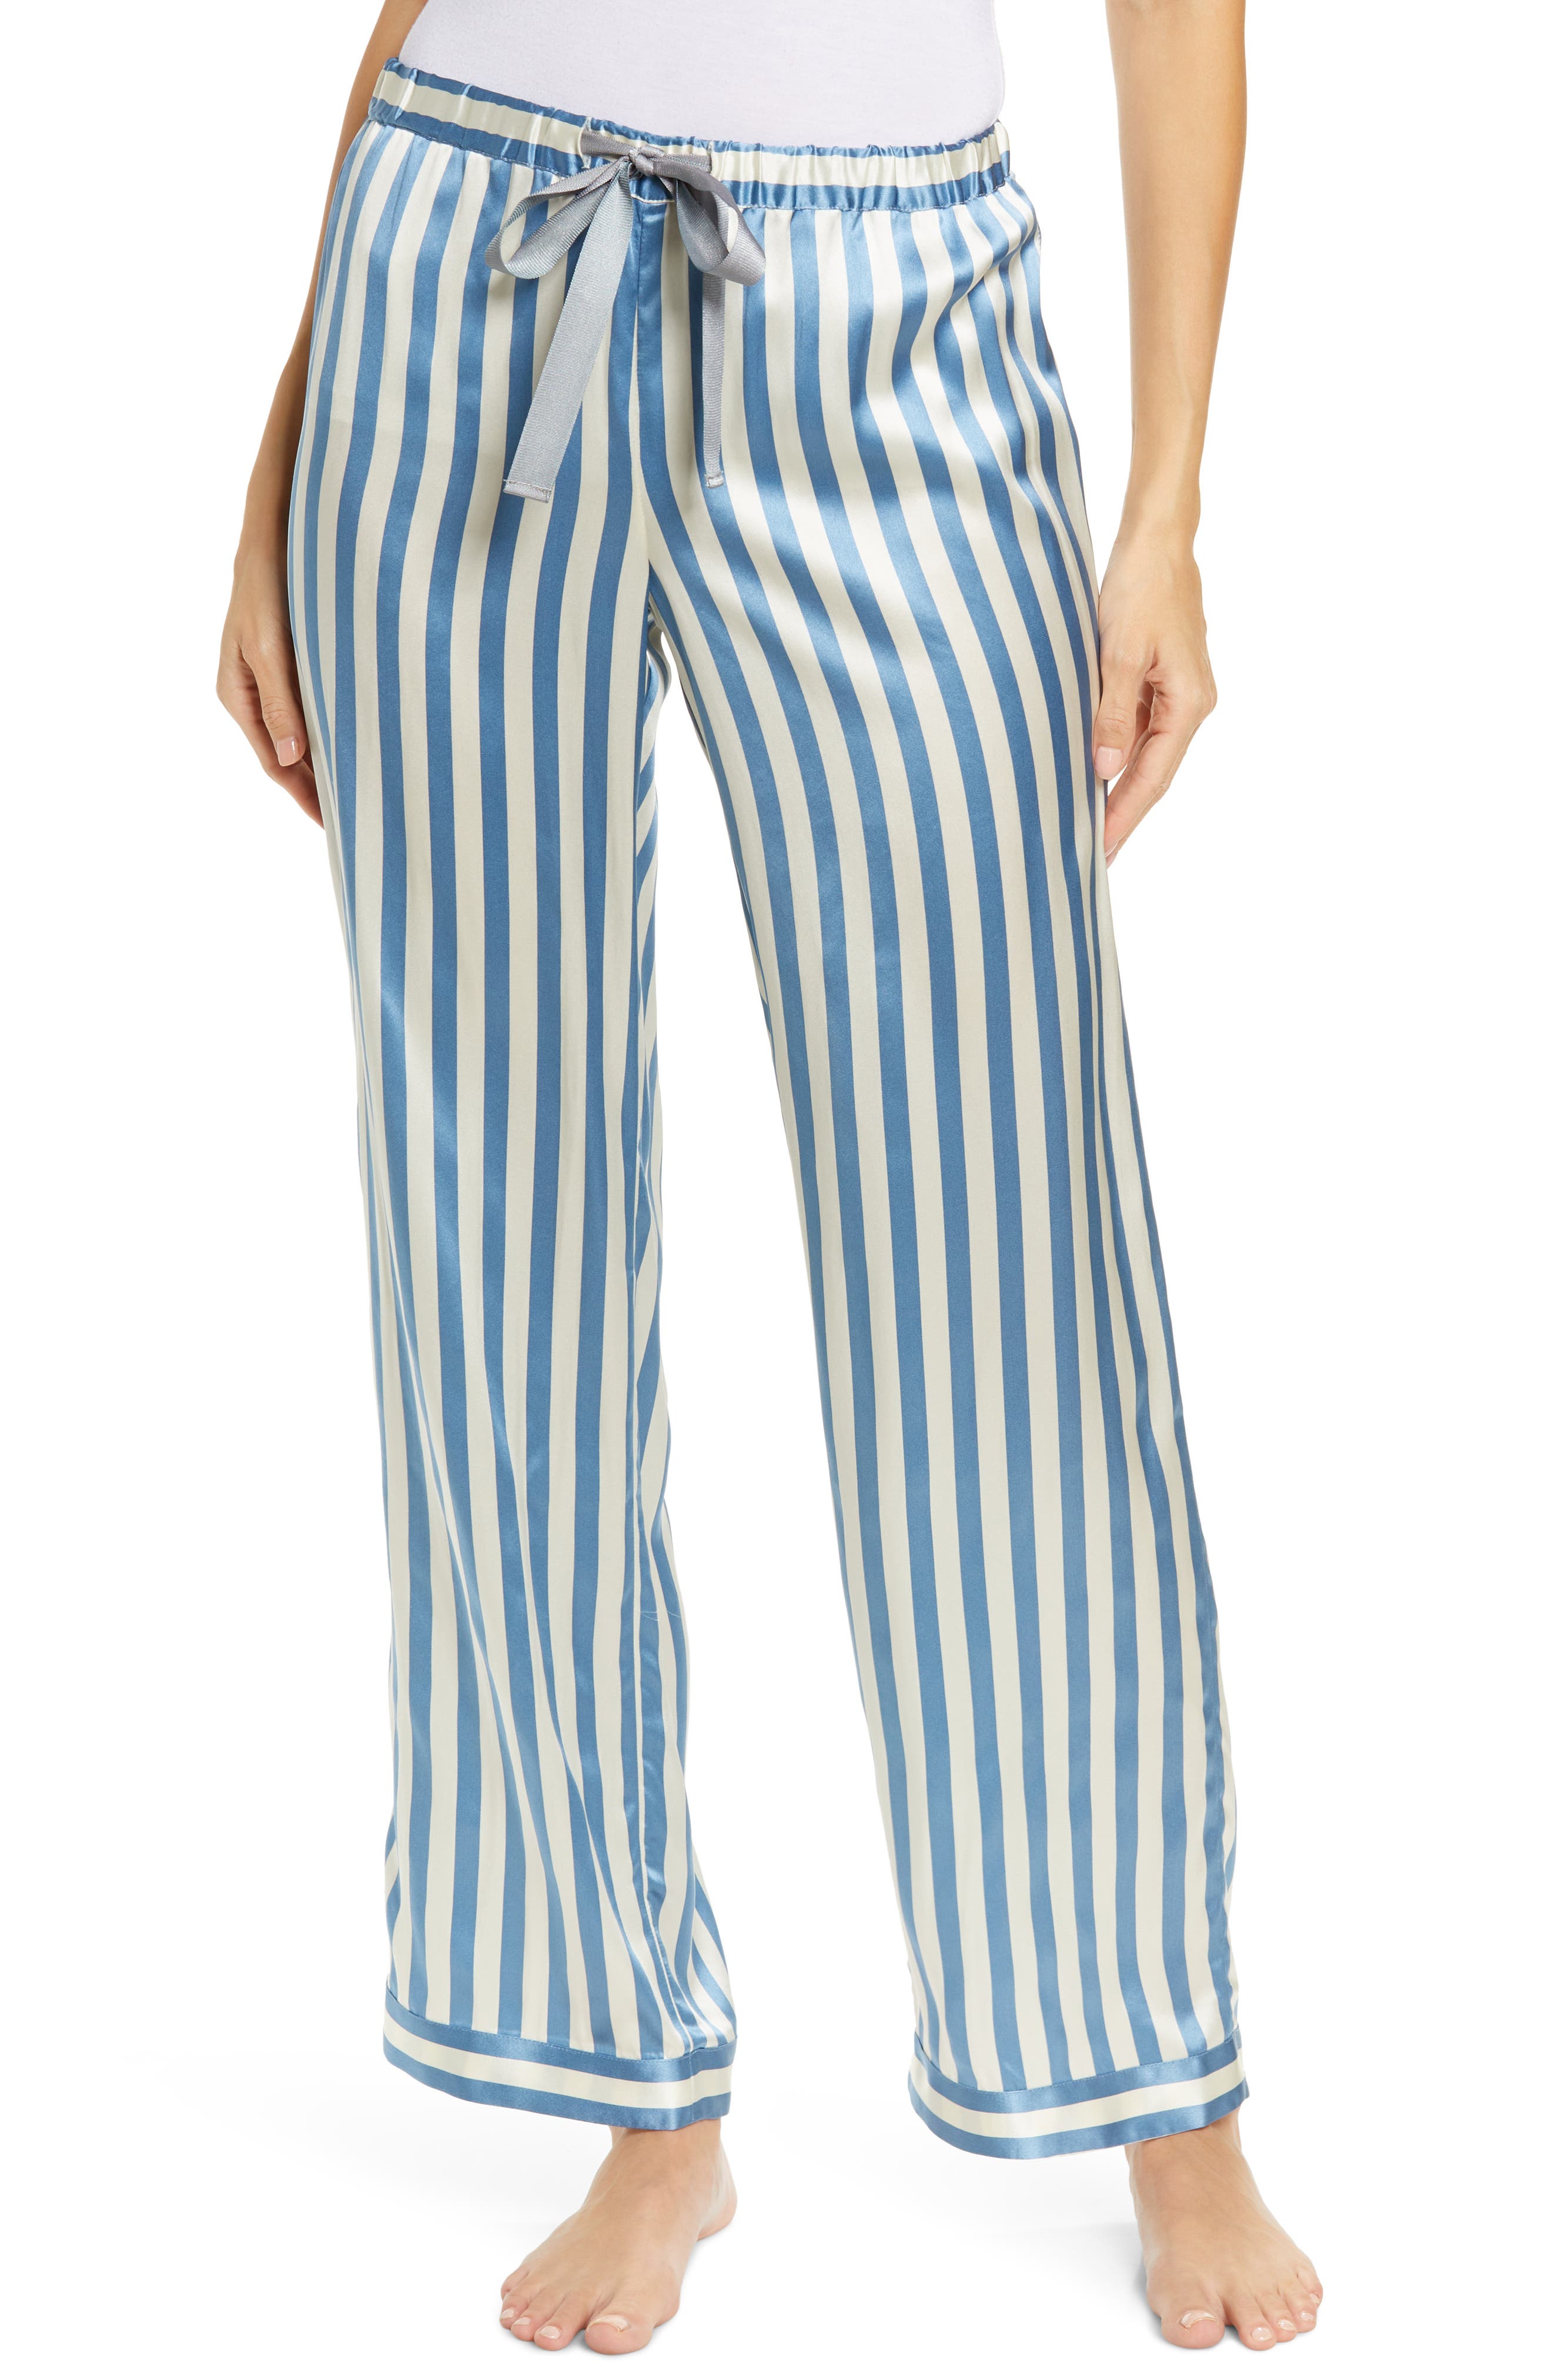 CLPP'LI Men's Cotton Pajama Pants Blue/White, X-Large 